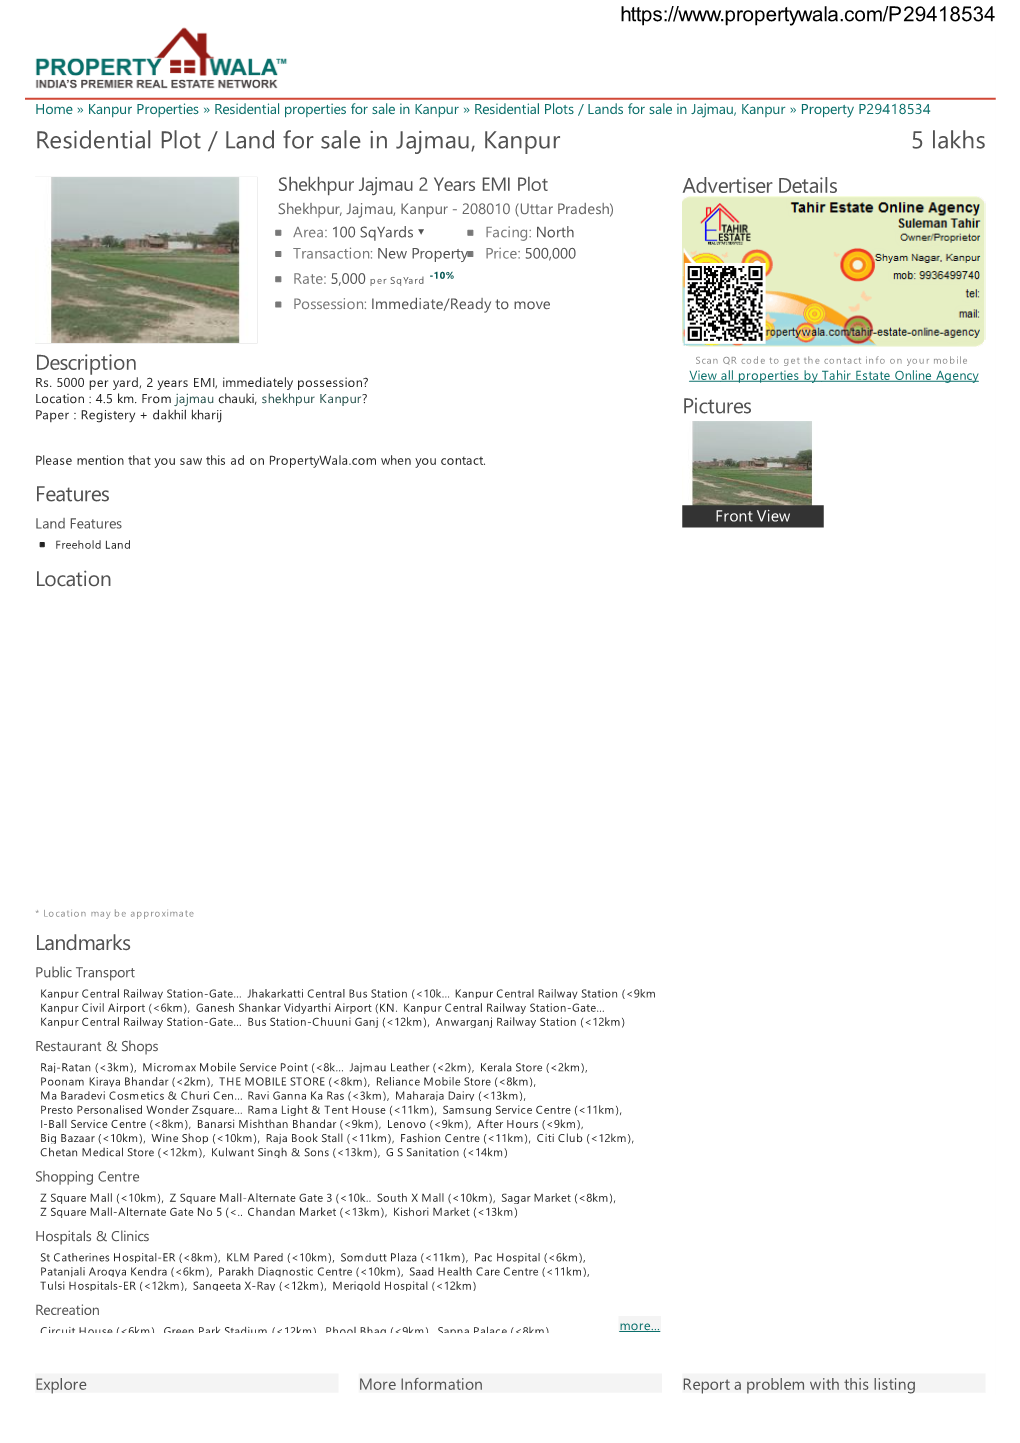 Residential Plot / Land for Sale in Jajmau, Kanpur (P29418534